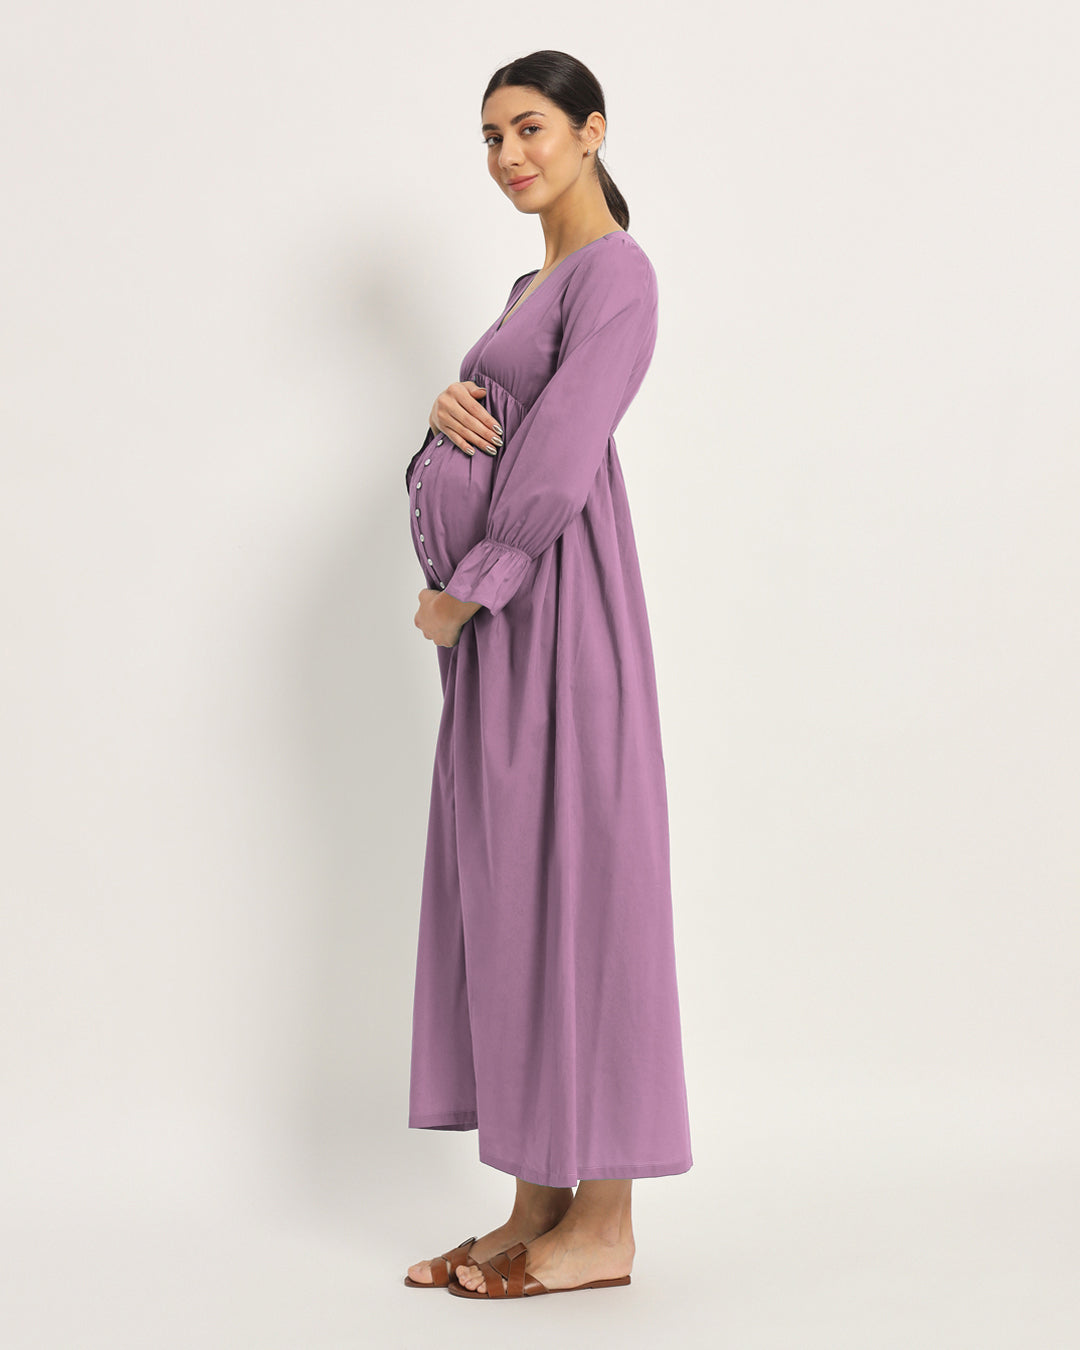 Combo: Iris Pink & Lilac Glowing Bellies Maternity & Nursing Dress- Set of 2